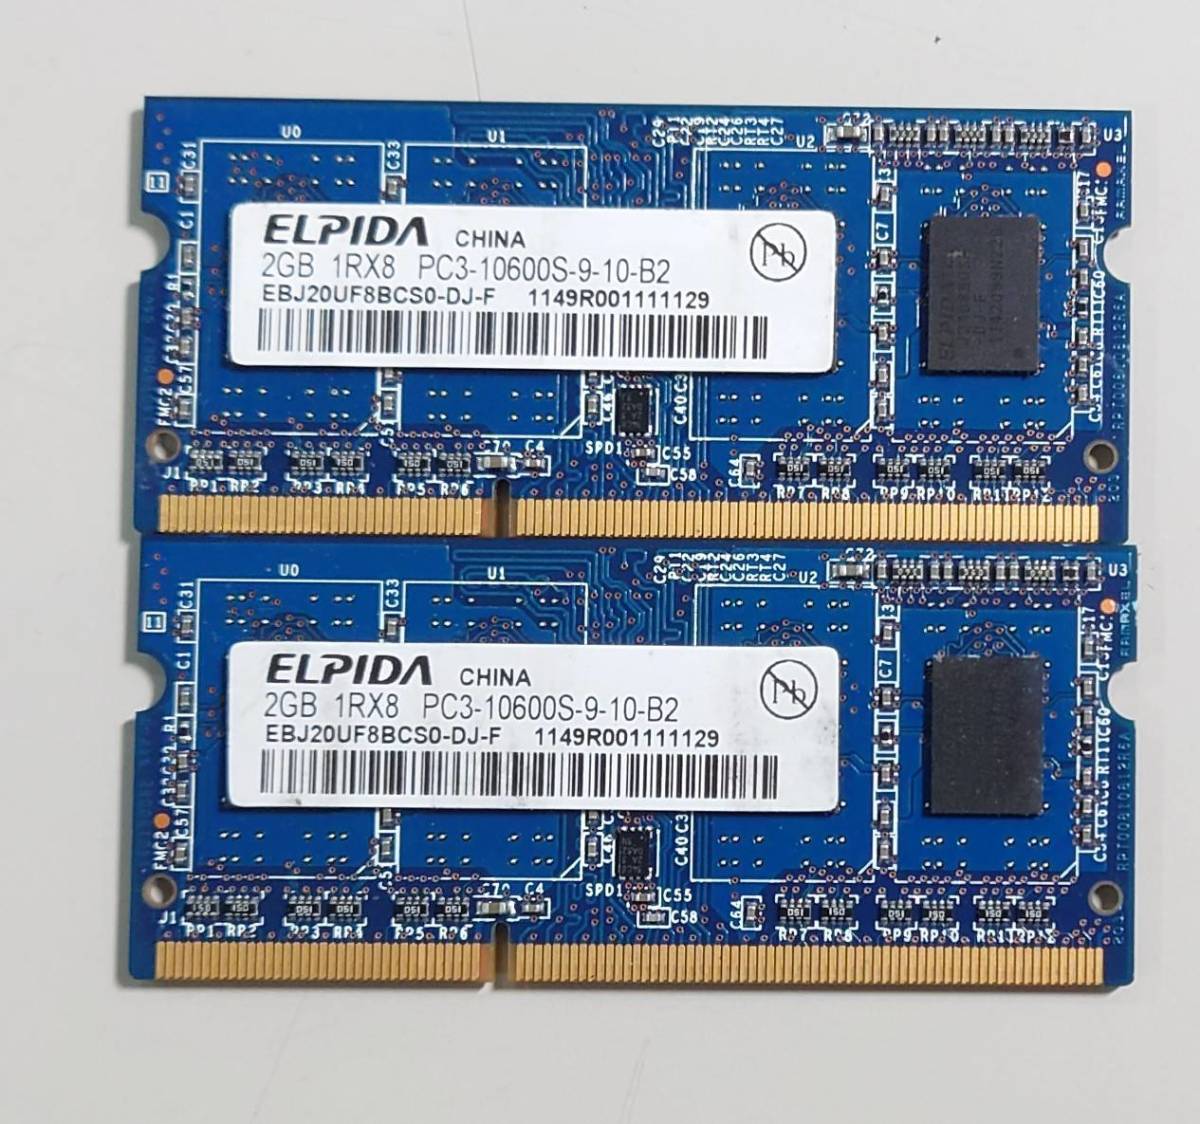 KN887 2GB ELPIDA 1Rx8 PC3-10600S-9-10-B2 2 pieces set 